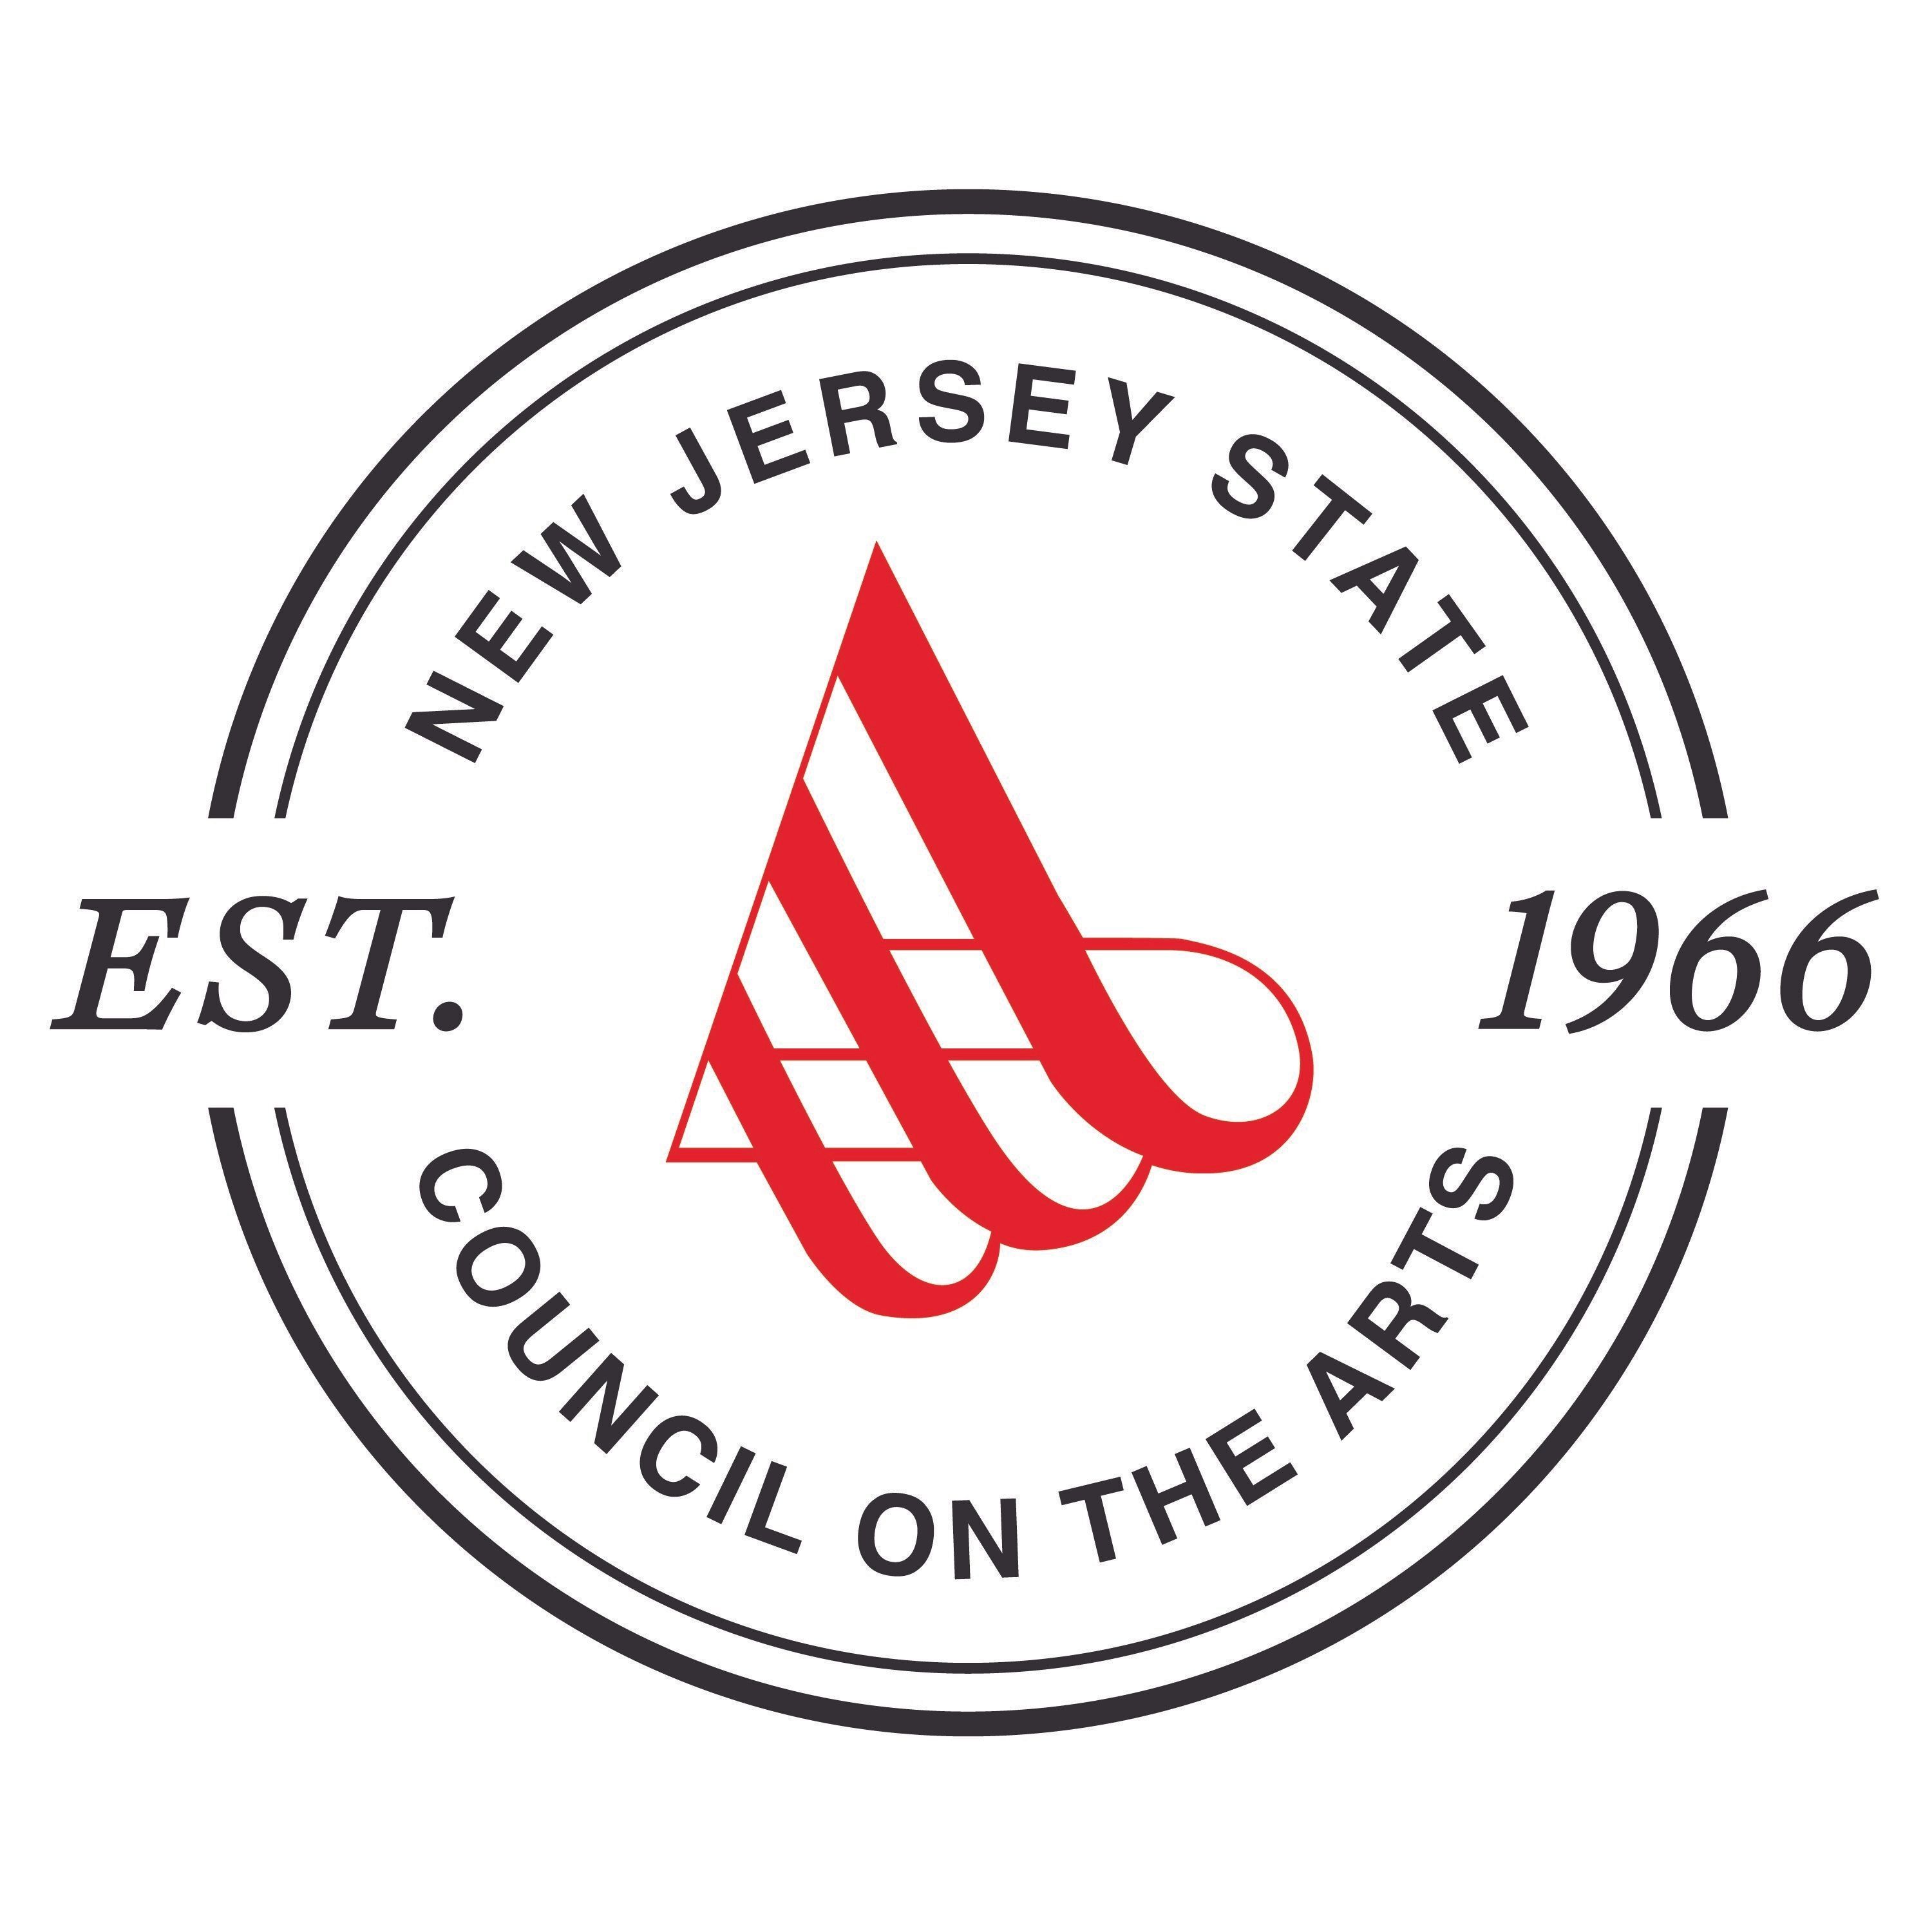 NJ Council on the Arts